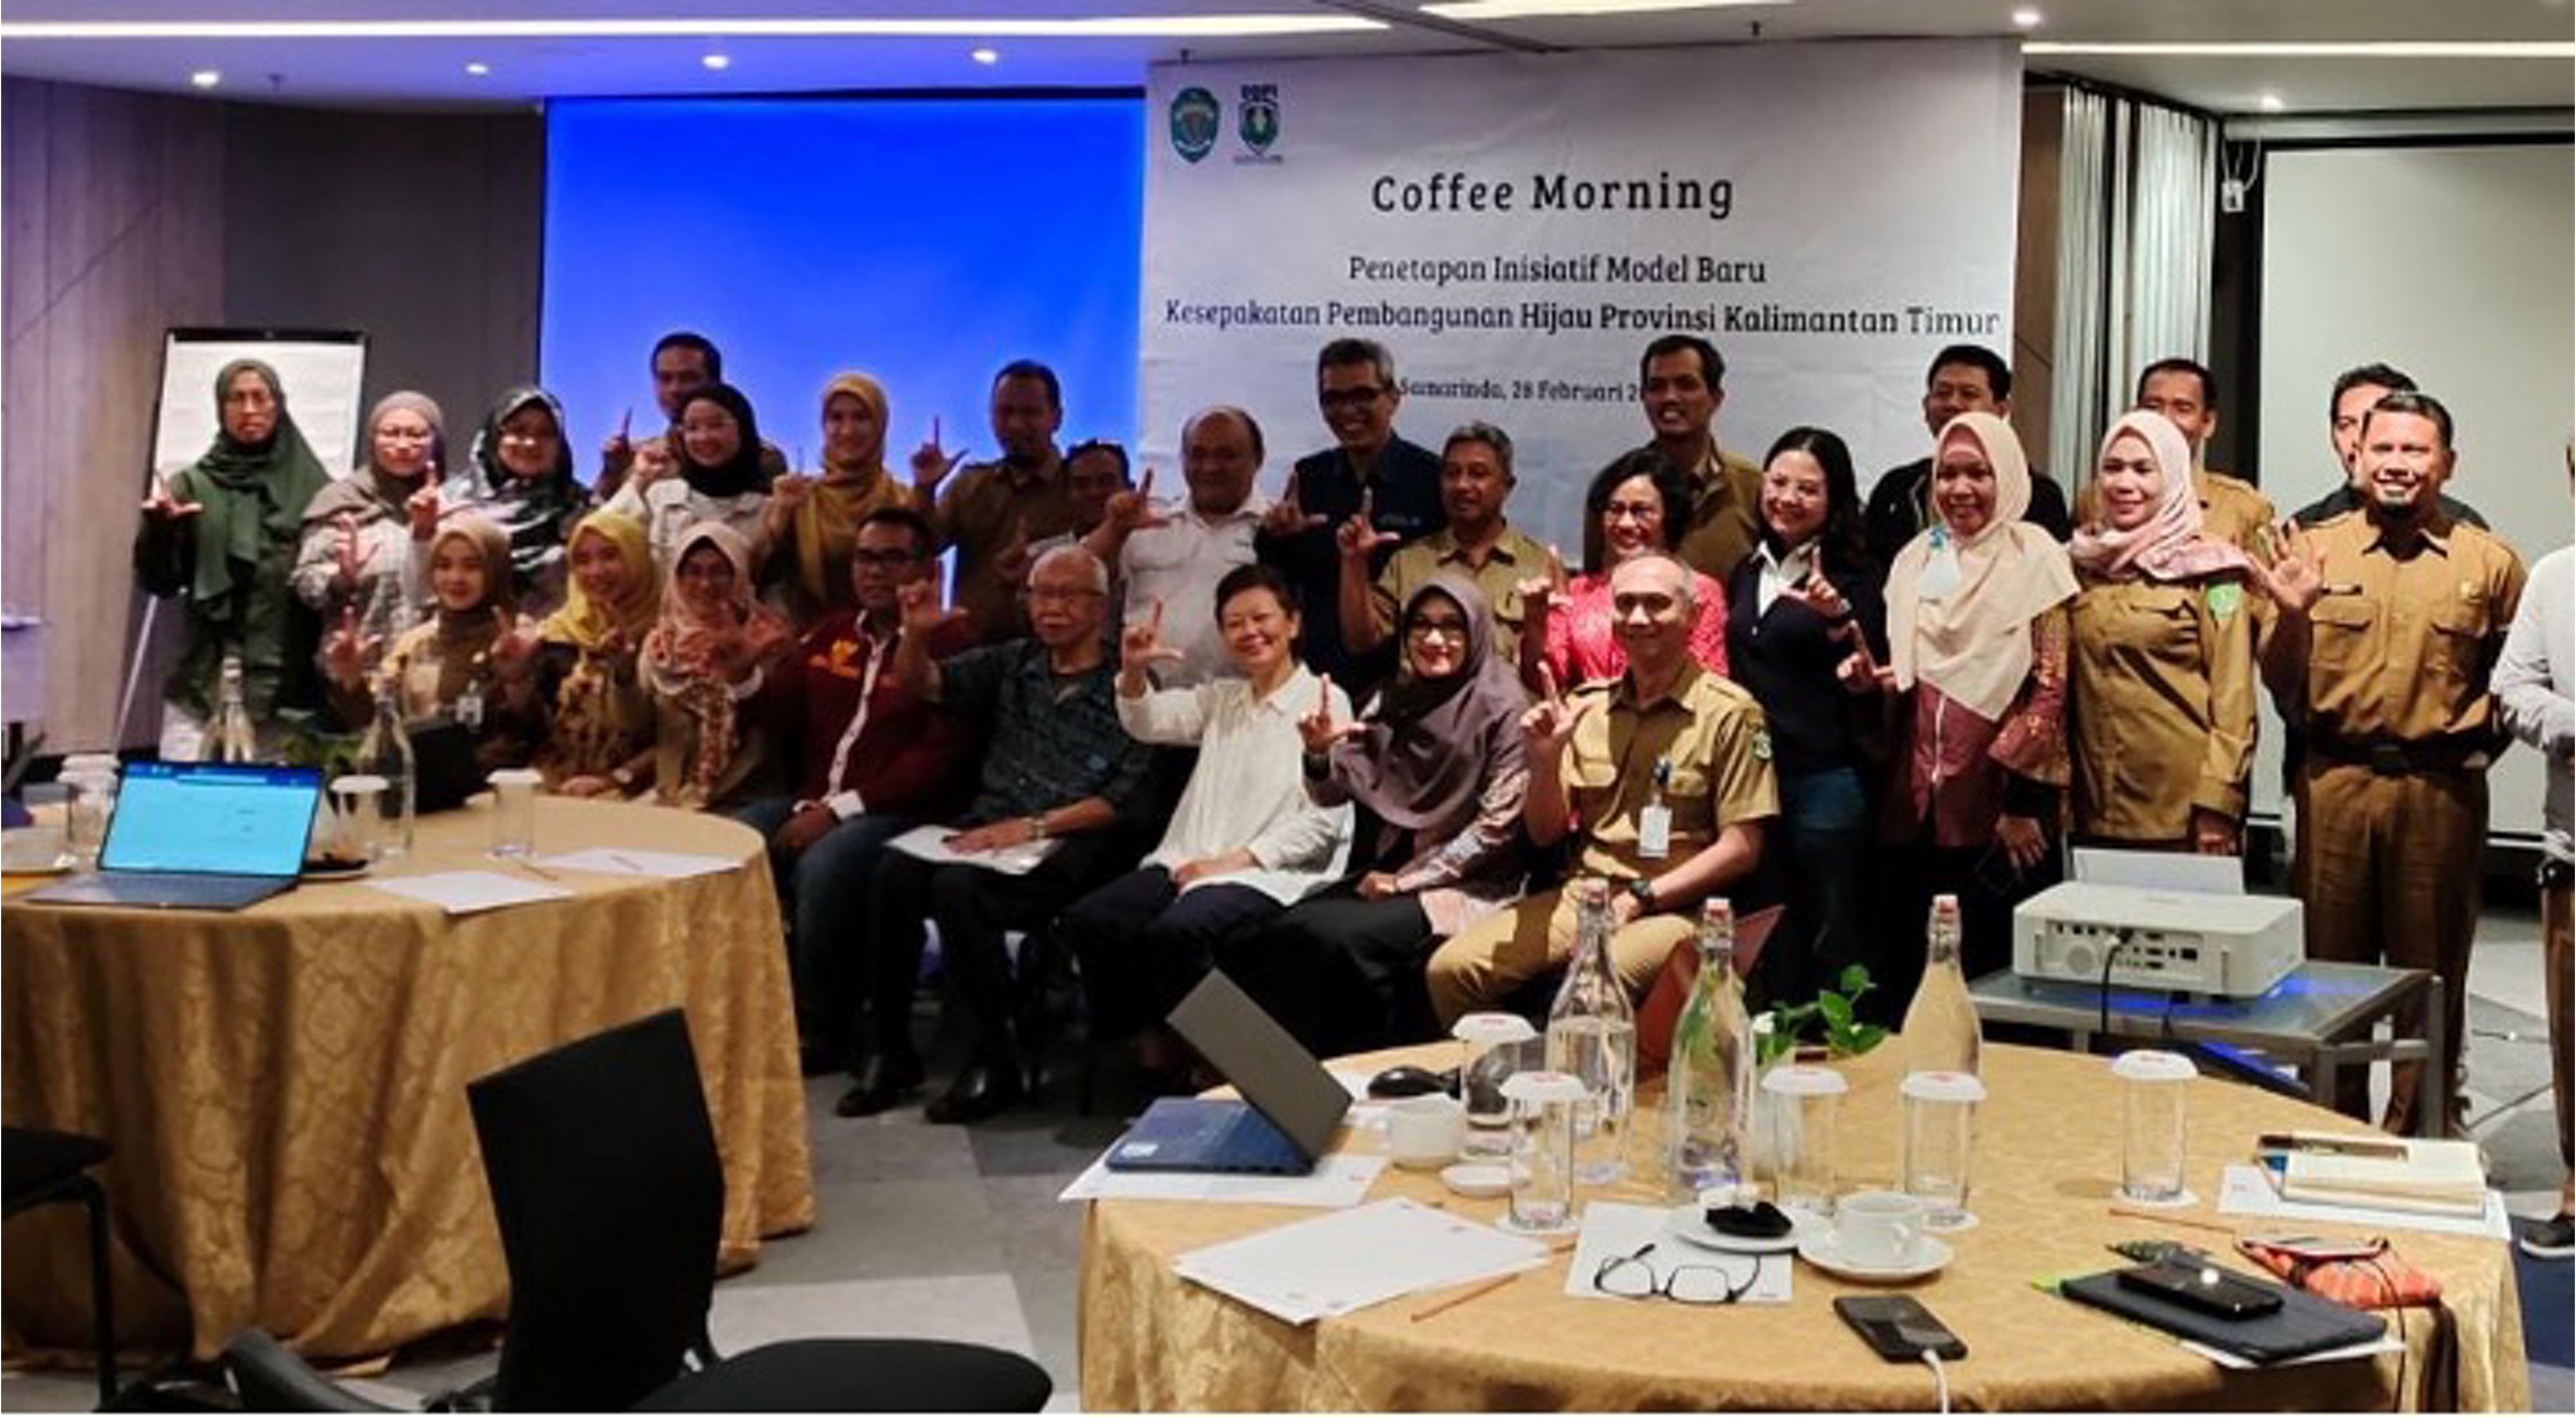 Peserta Coffee Morning Penetapan Inisiatif Model Pembangunan Hijau Provinsi Kalimantan Timur